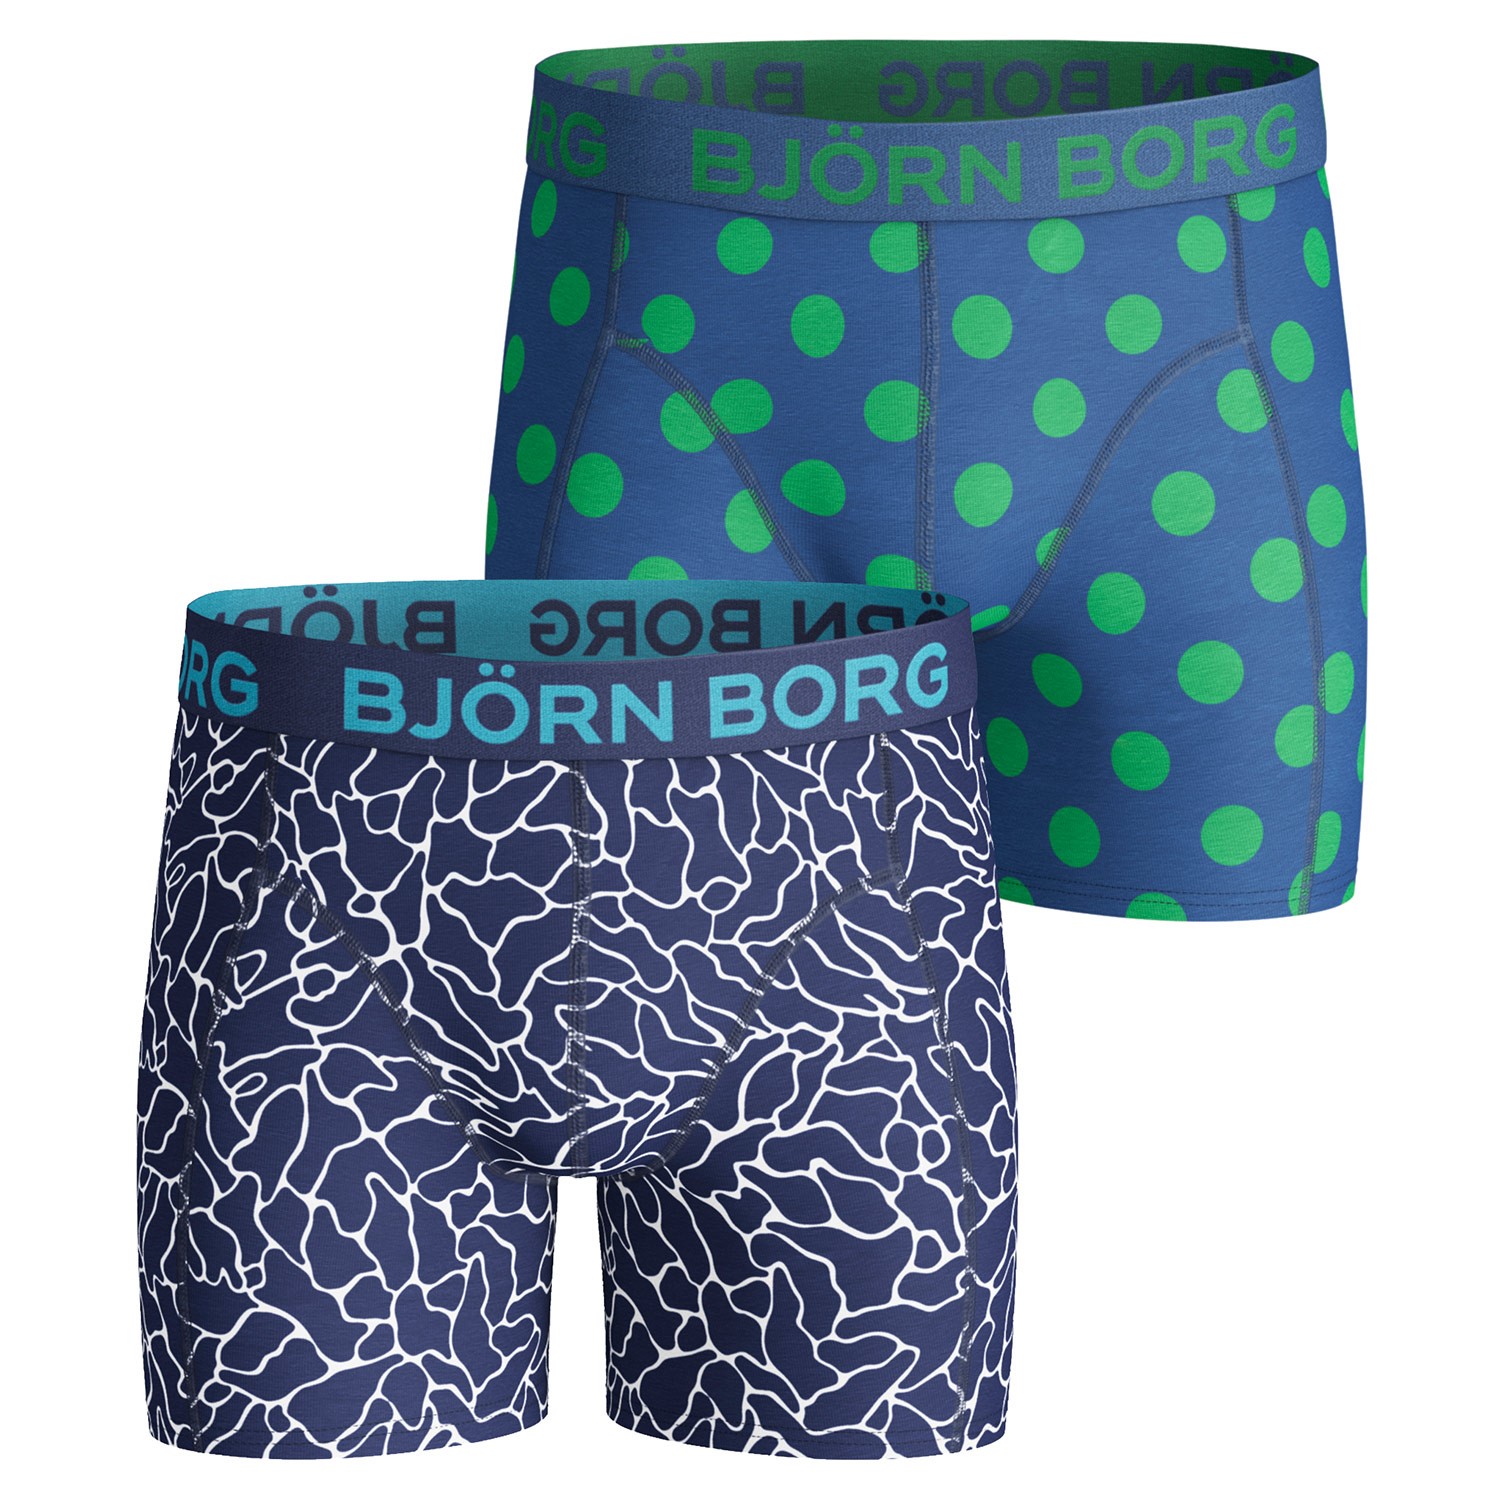 Björn Borg Boys Shorts Surface and Polka Dot